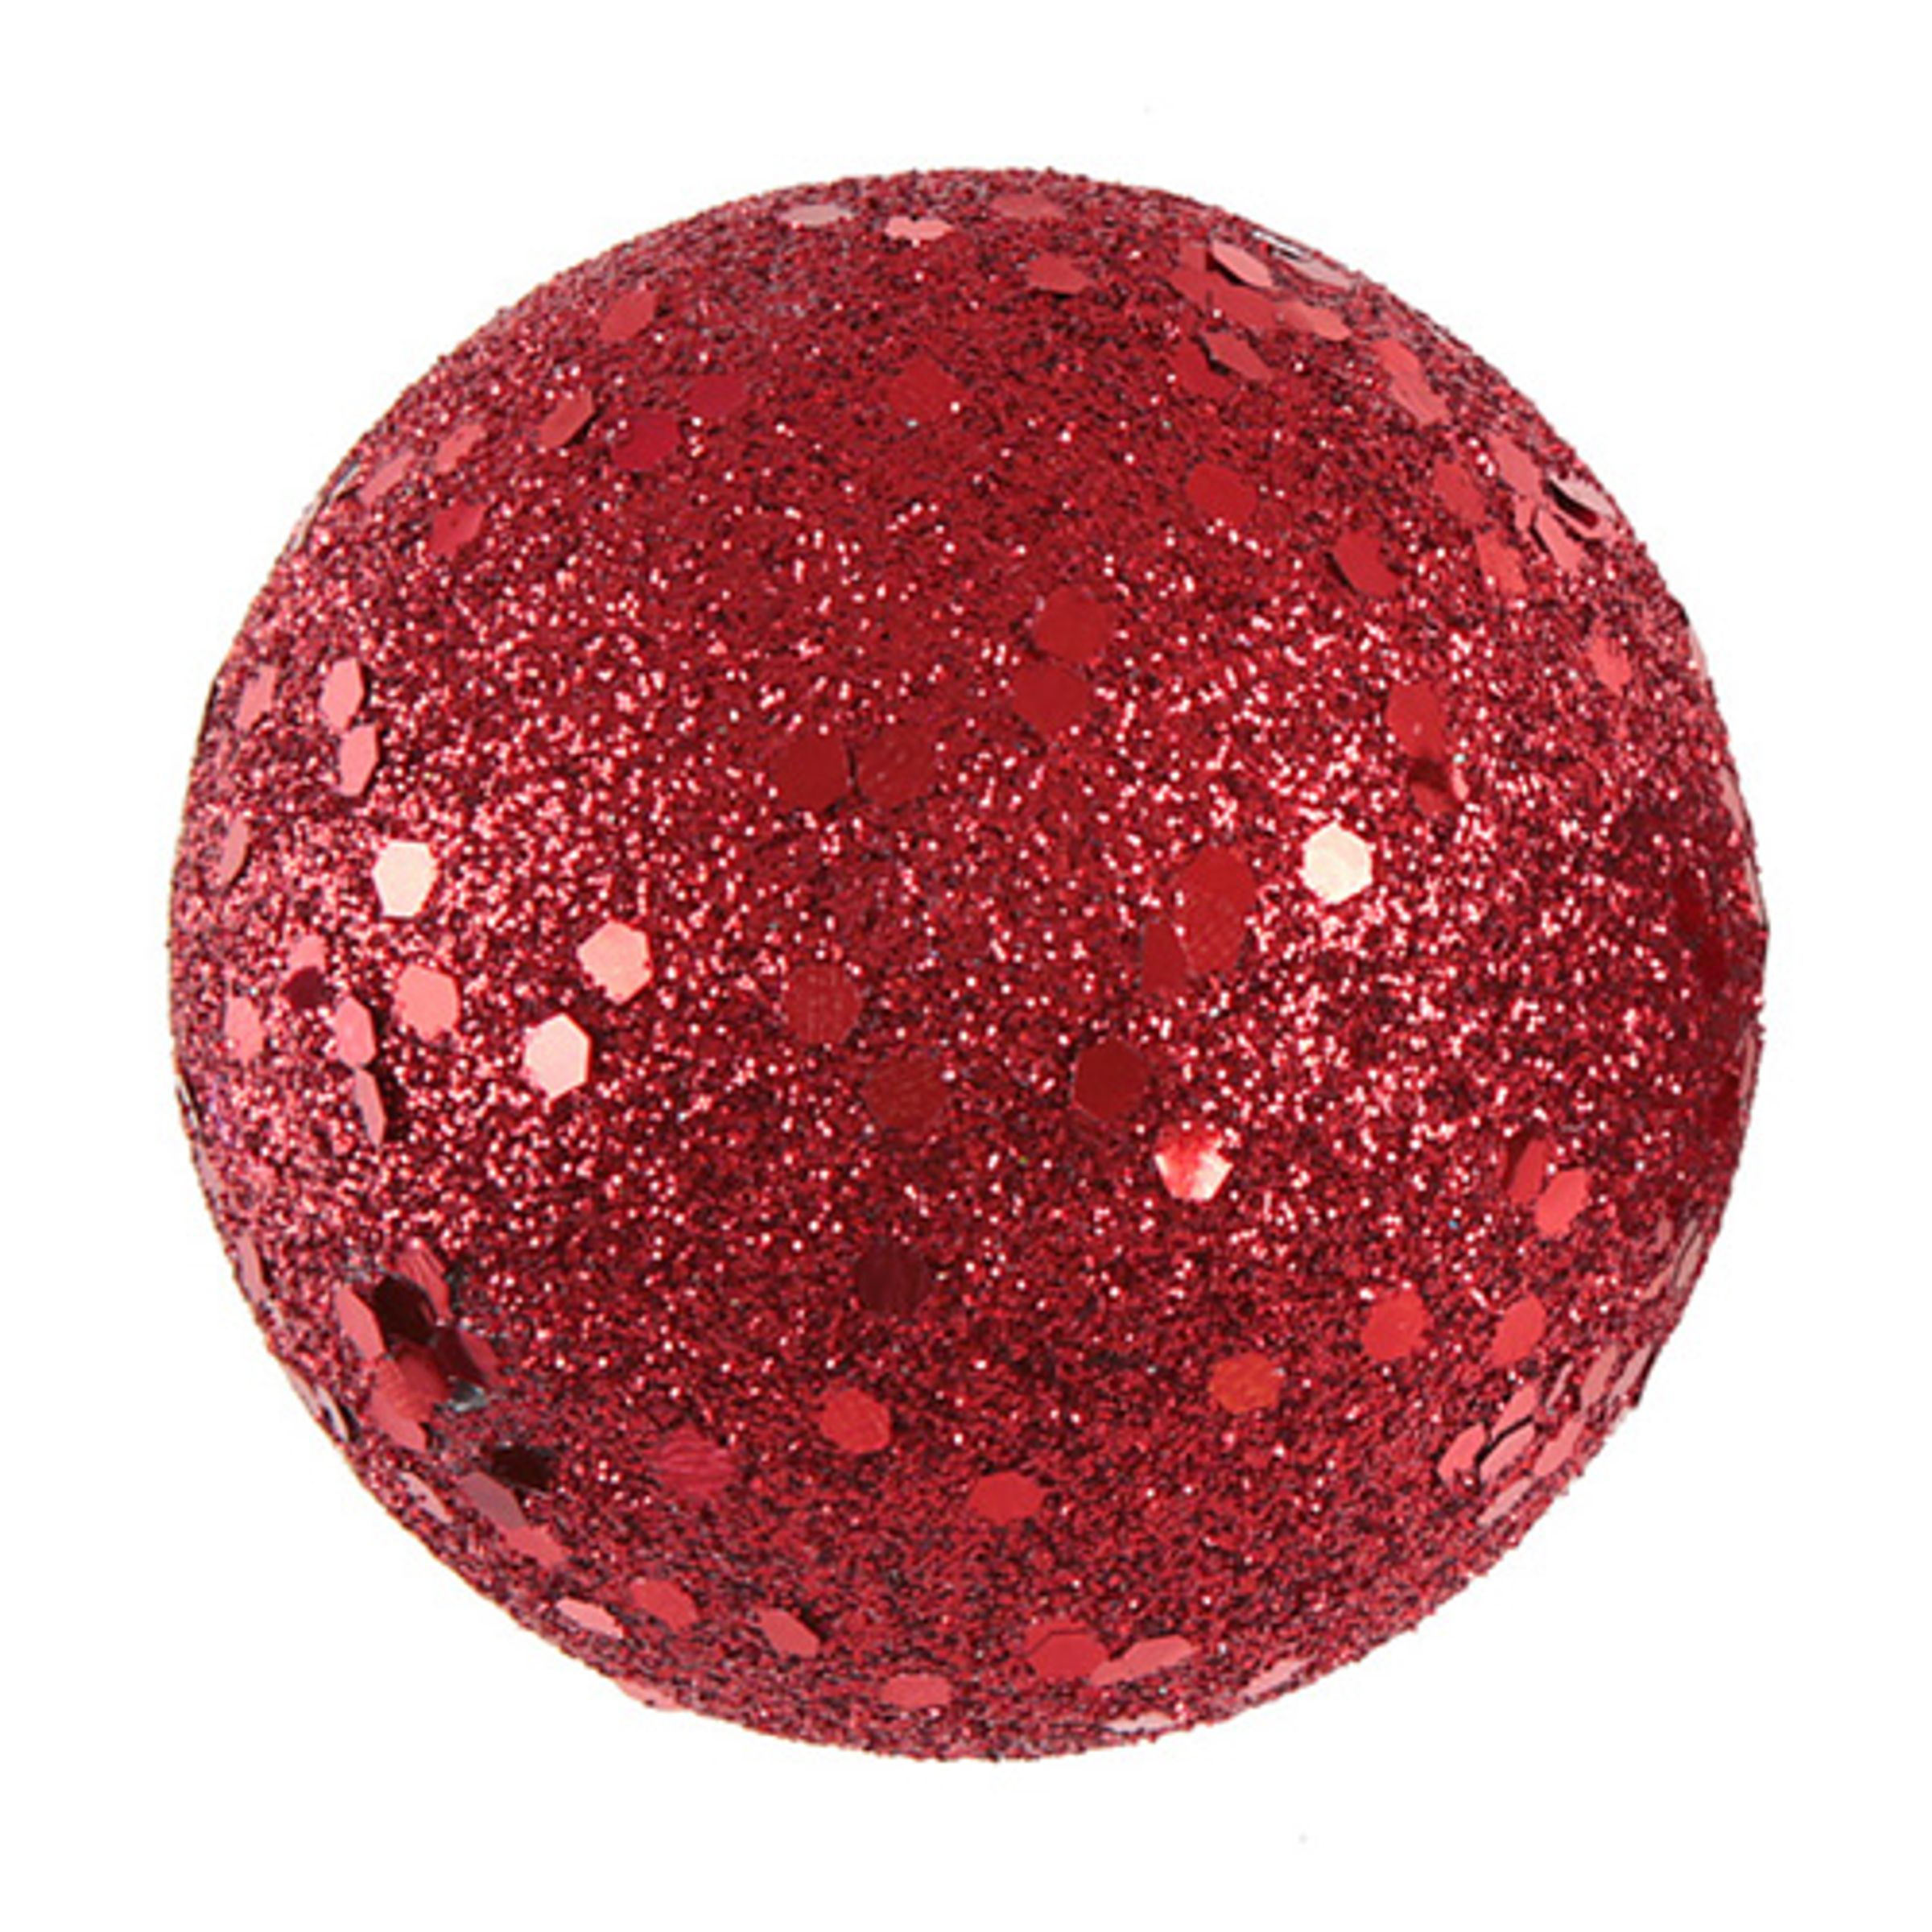 Dekorationsbollar Röd/Glitter - 10-pack